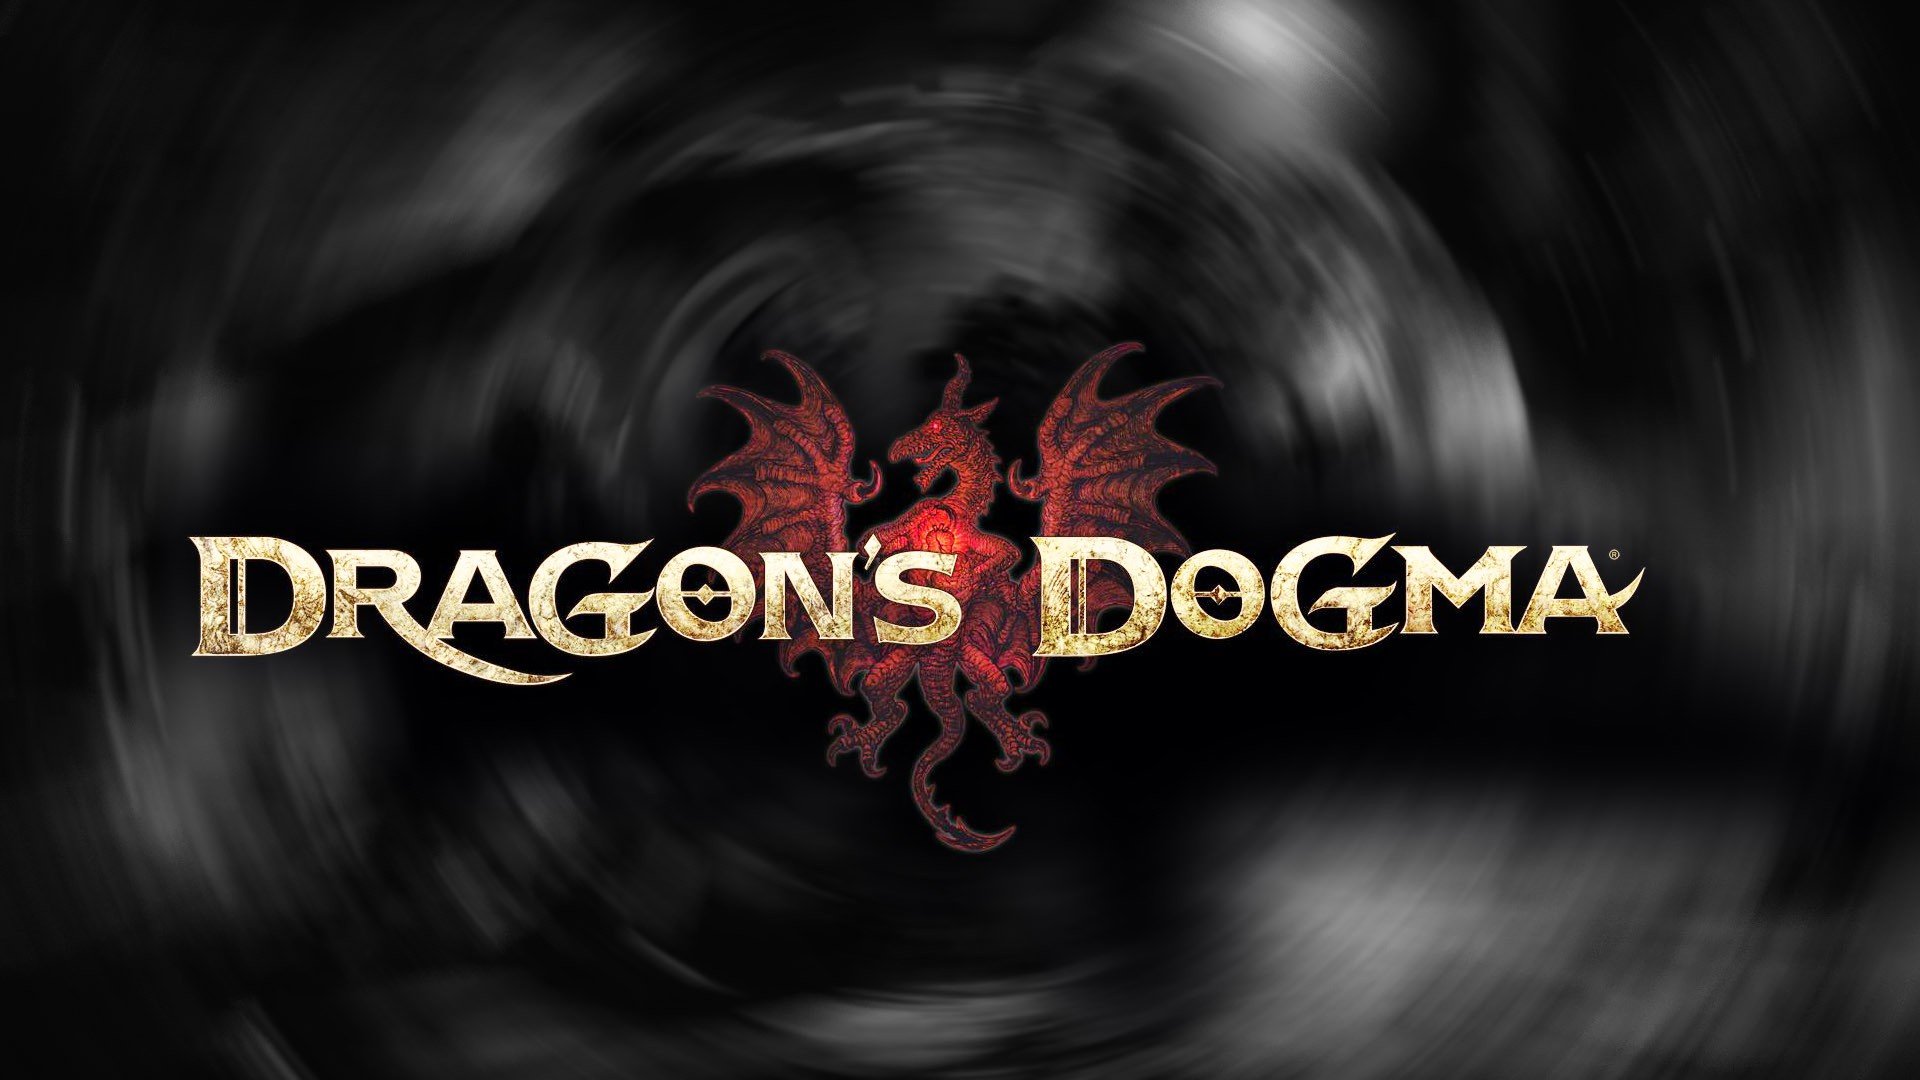 Dragon's Dogma: Dark Arisen Wallpapers